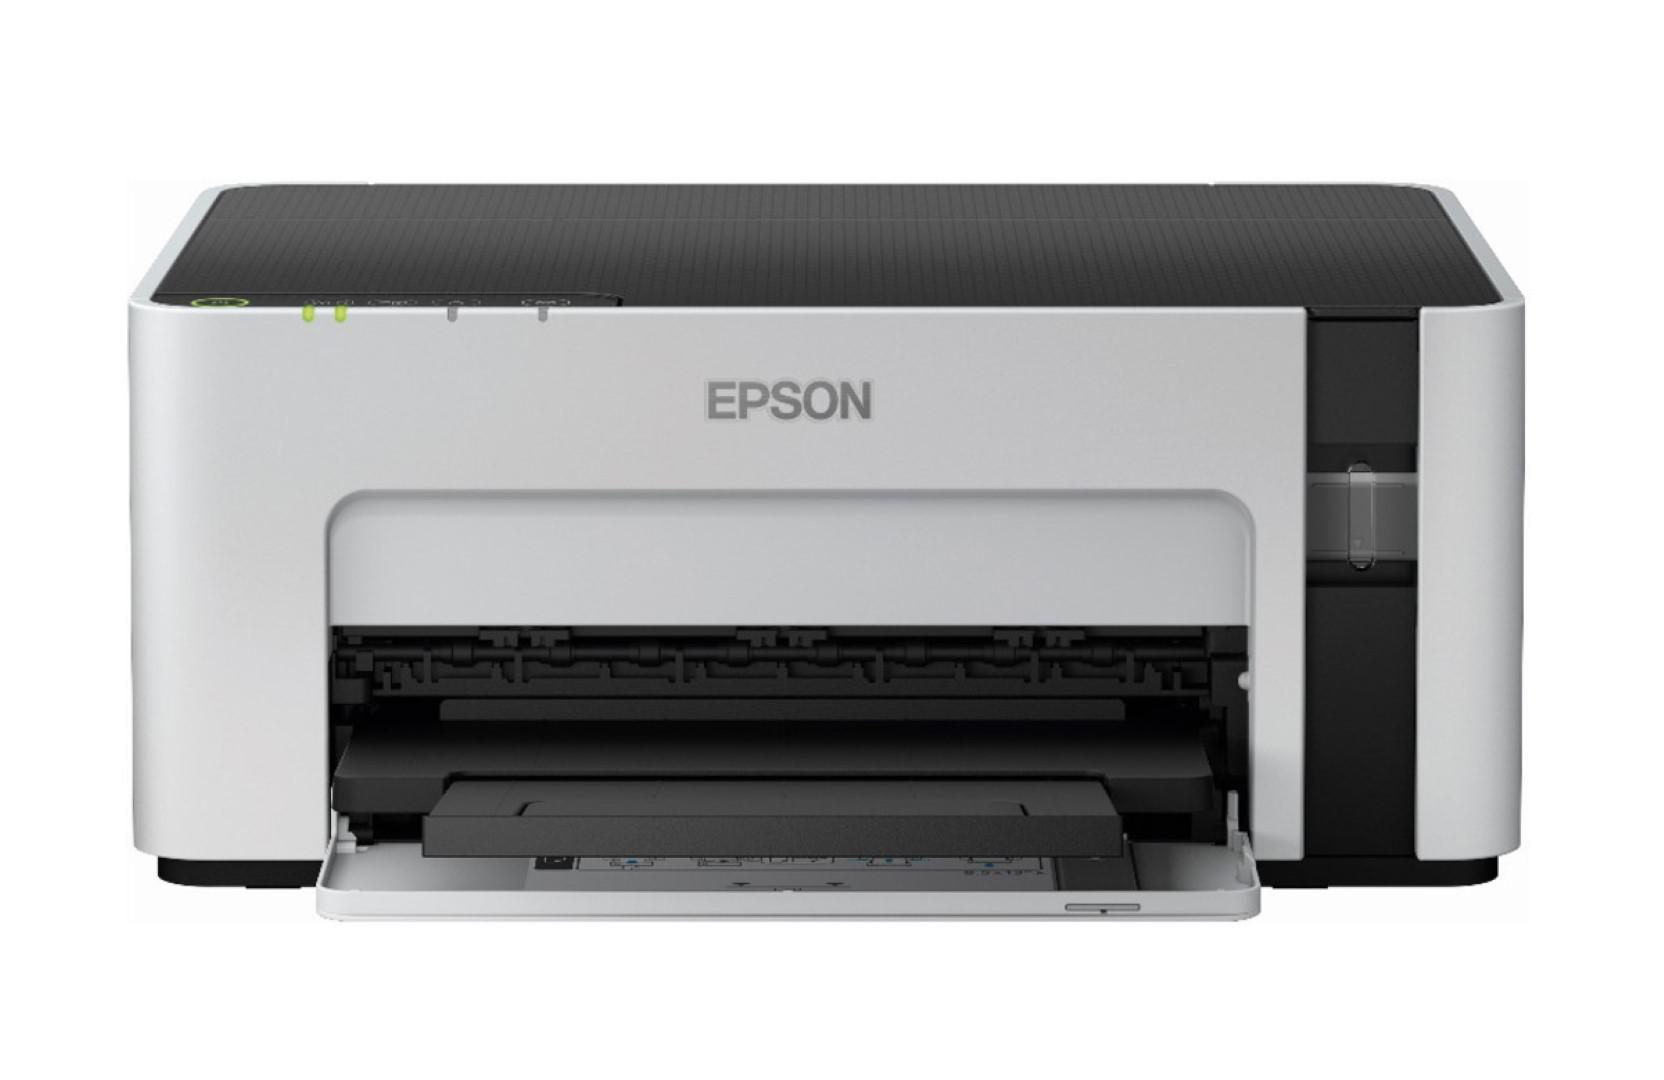 Imprimanta inkjet mono CISS Epson M1100, A4, USB 2.0, alb/negru